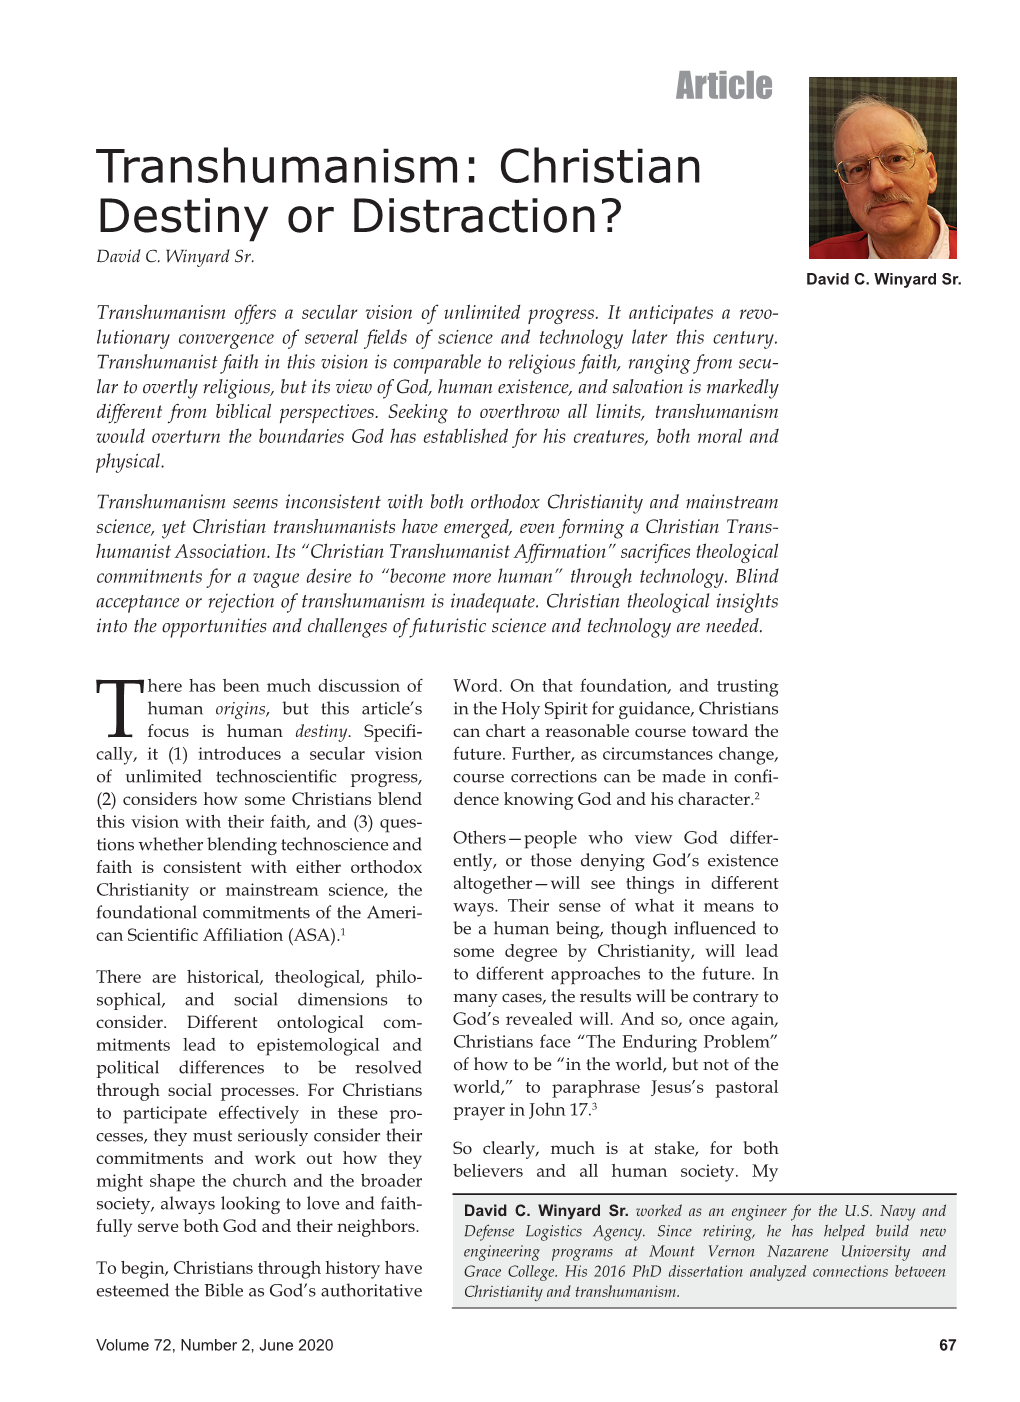 Transhumanism: Christian Destiny Or Distraction? David C